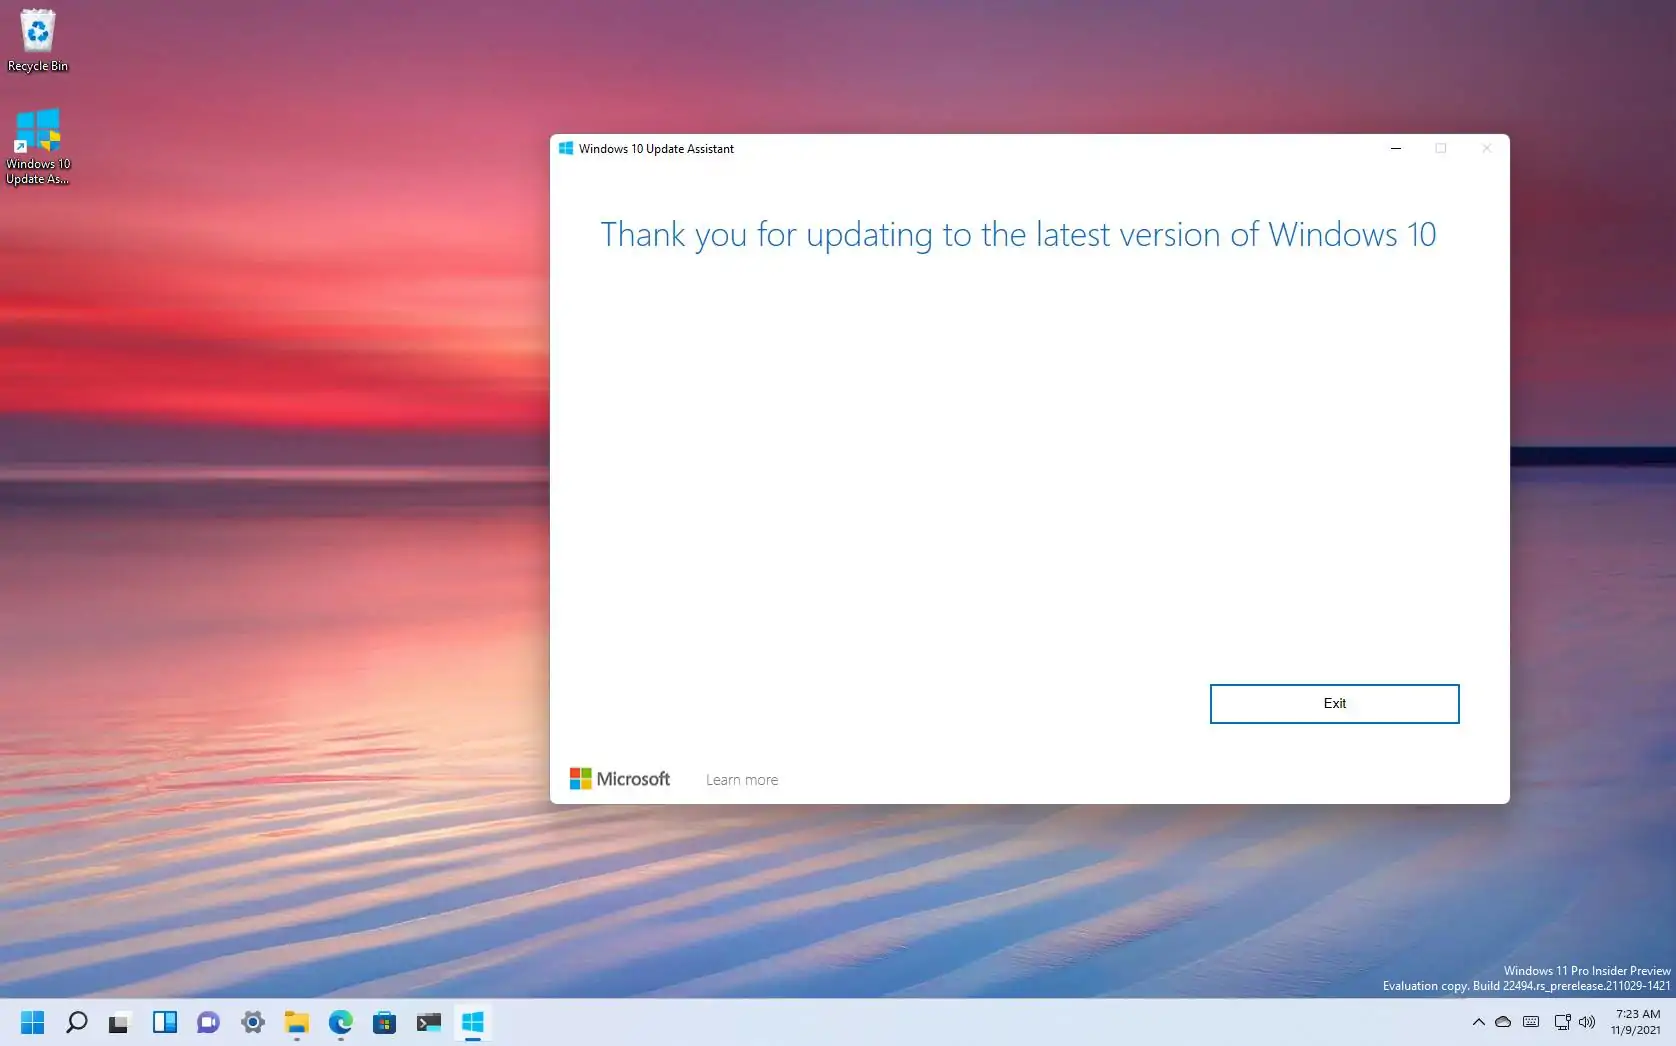 Windows 10 21H2 Update Assistant